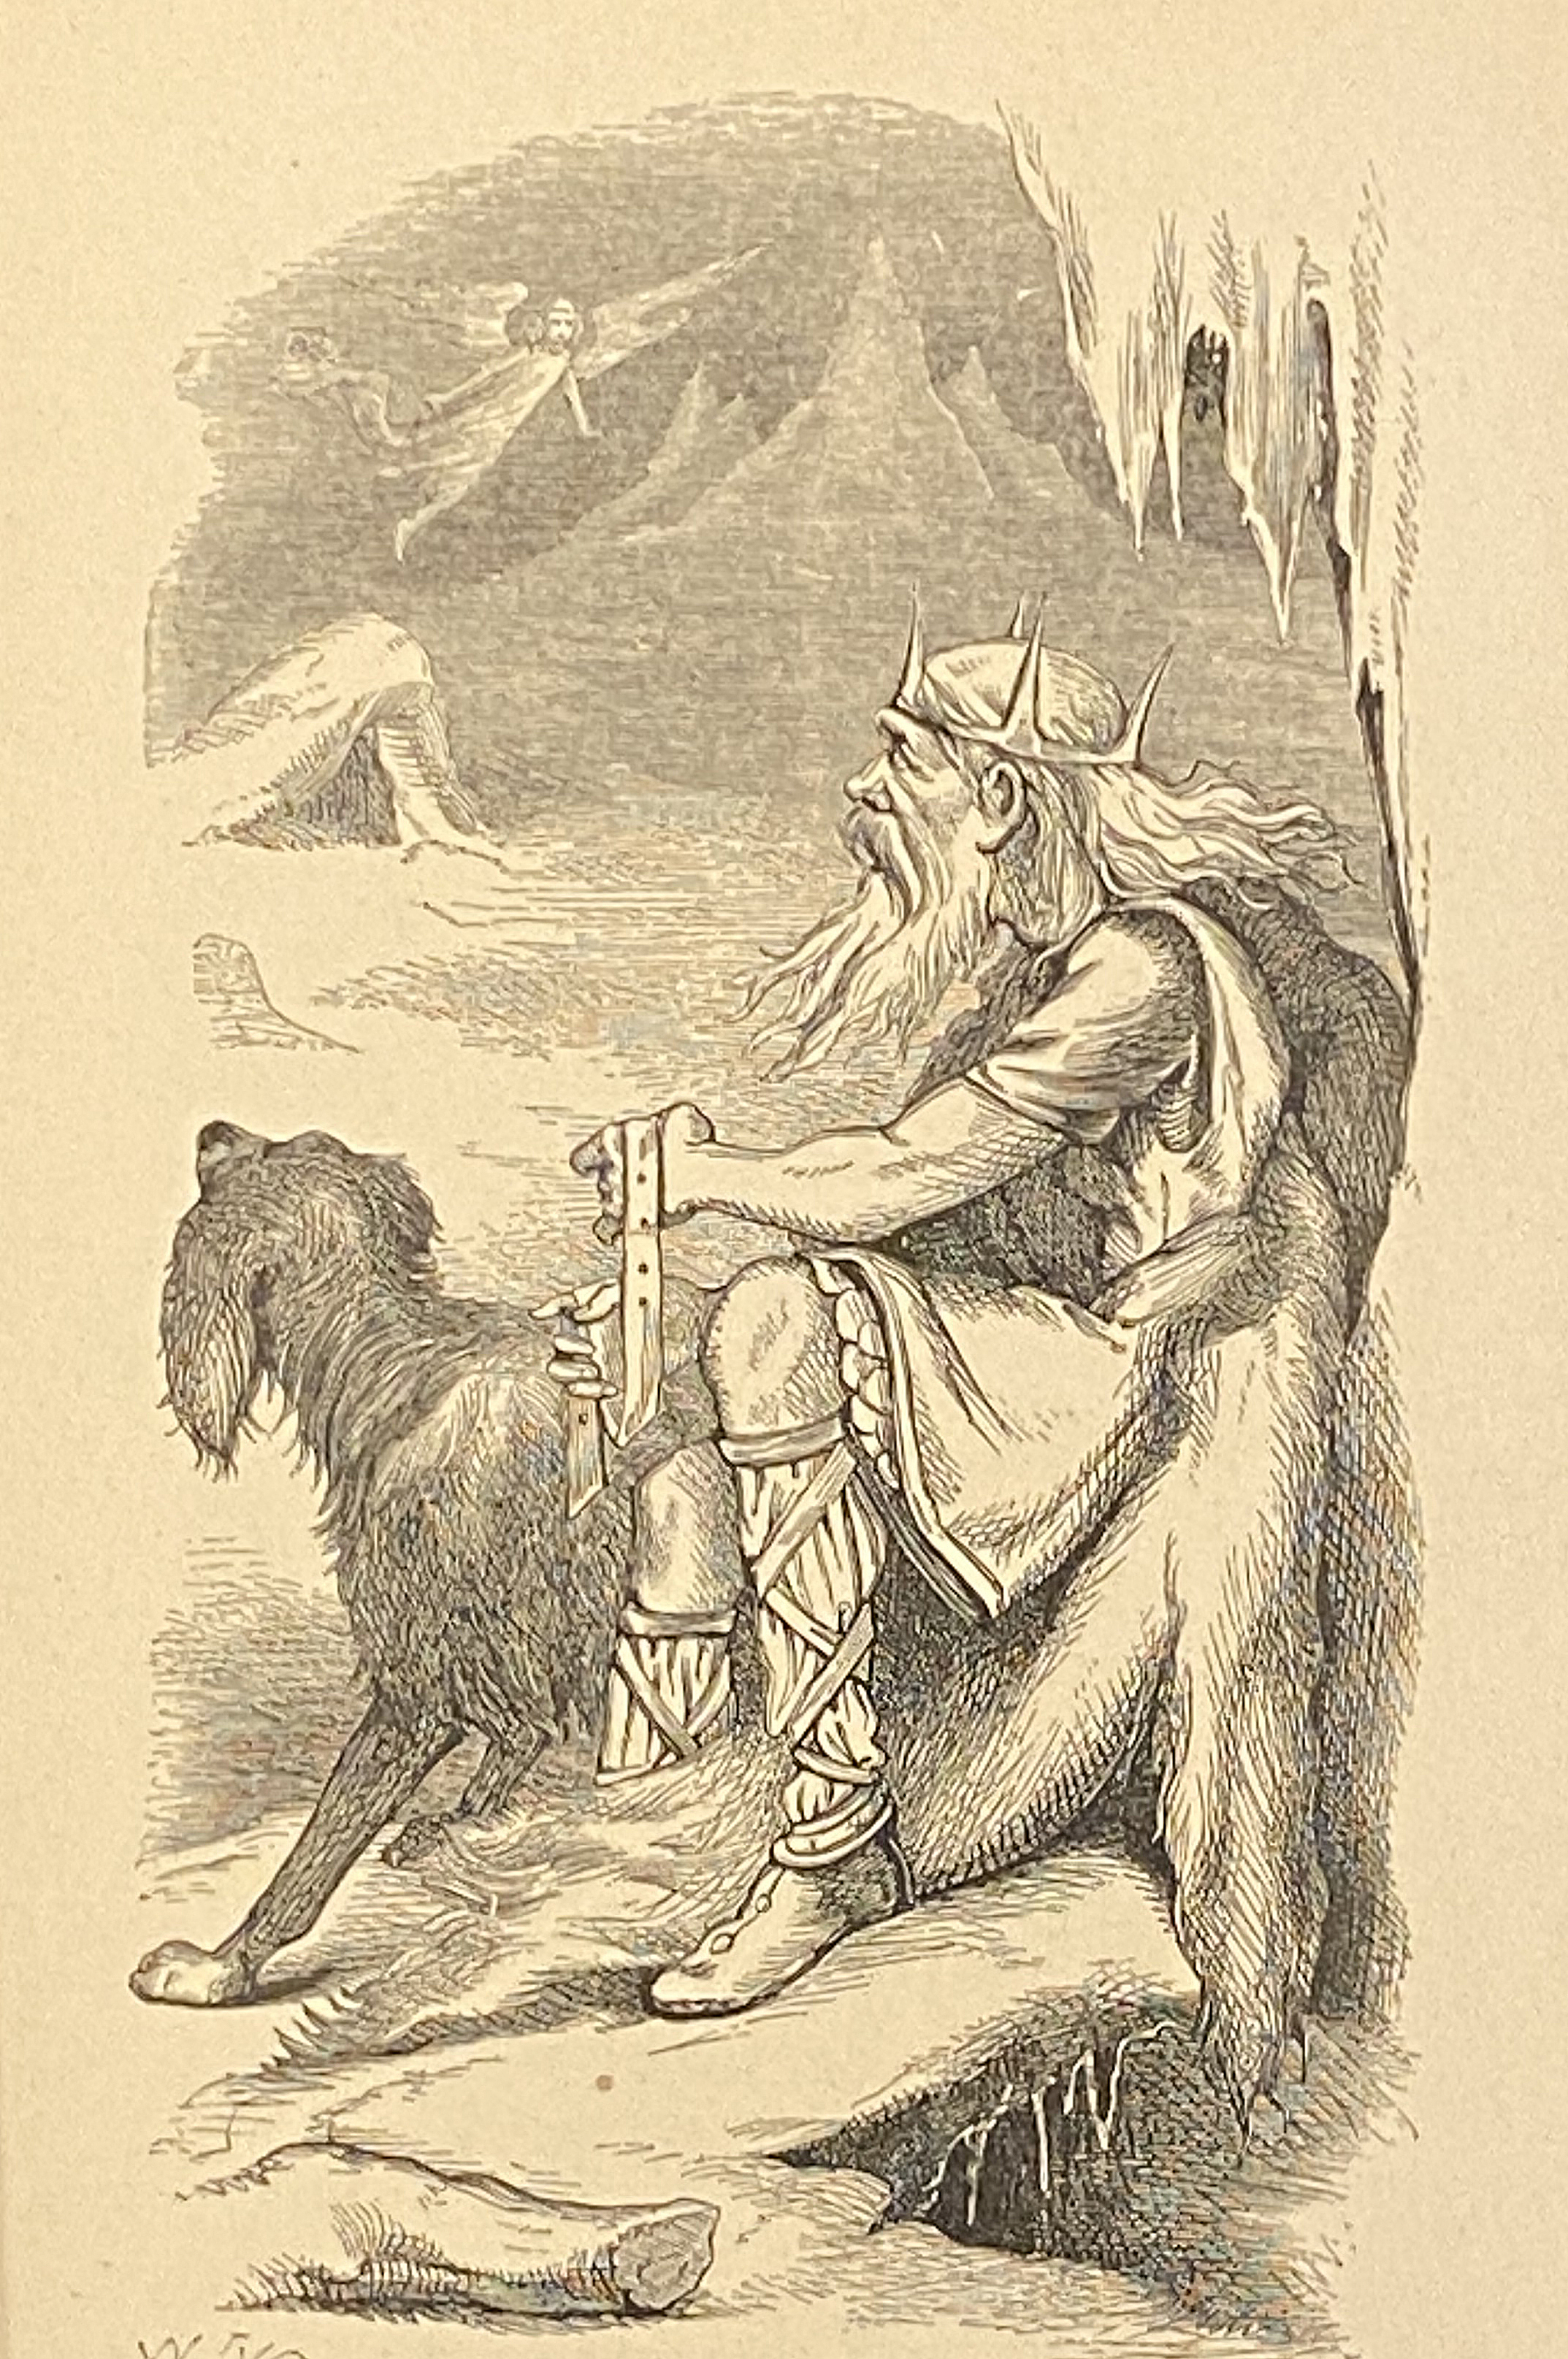 Þrymr and Loki